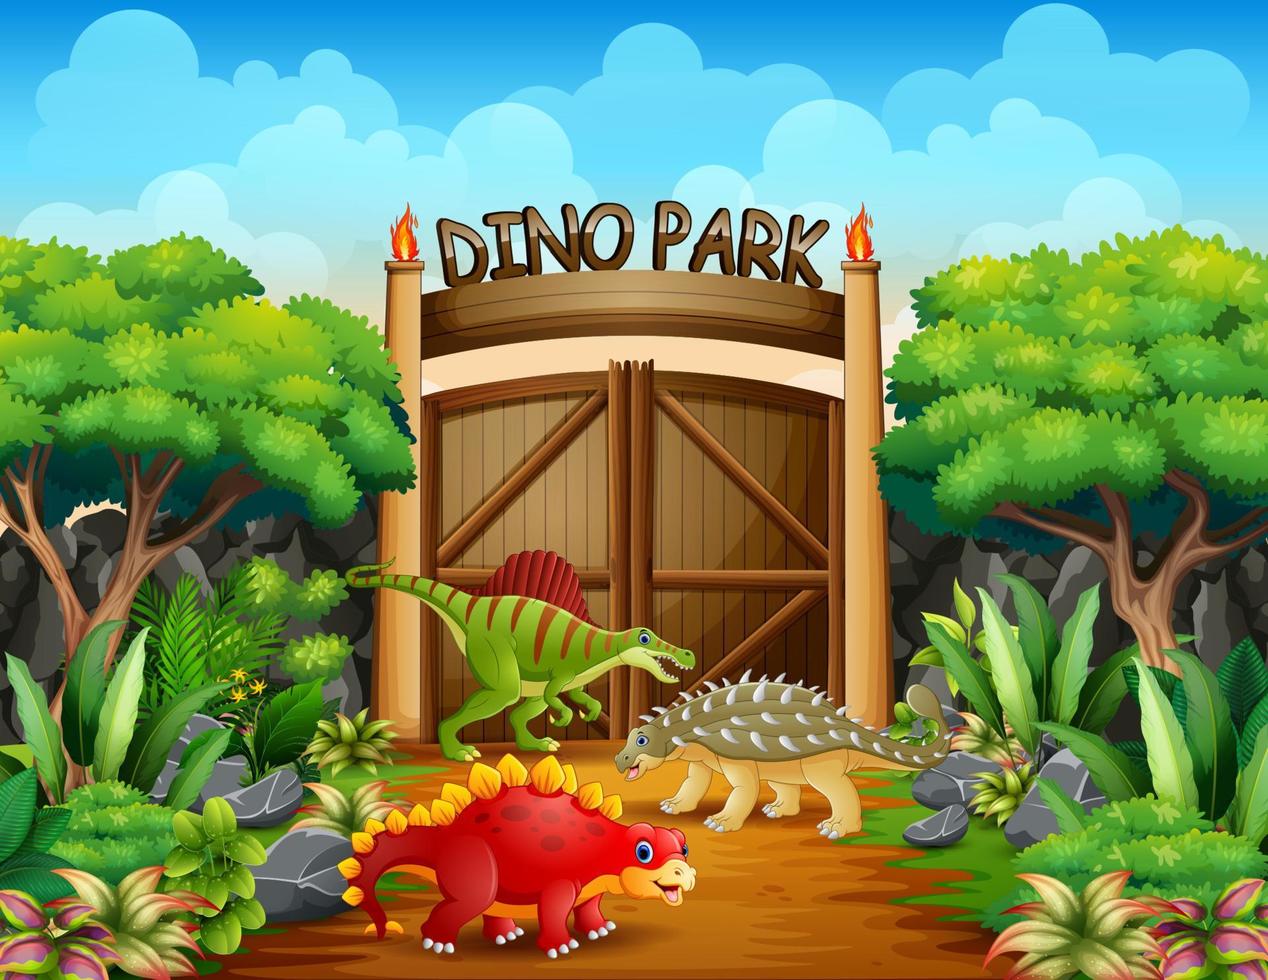 Different dinosaurs in dino park illustration vector